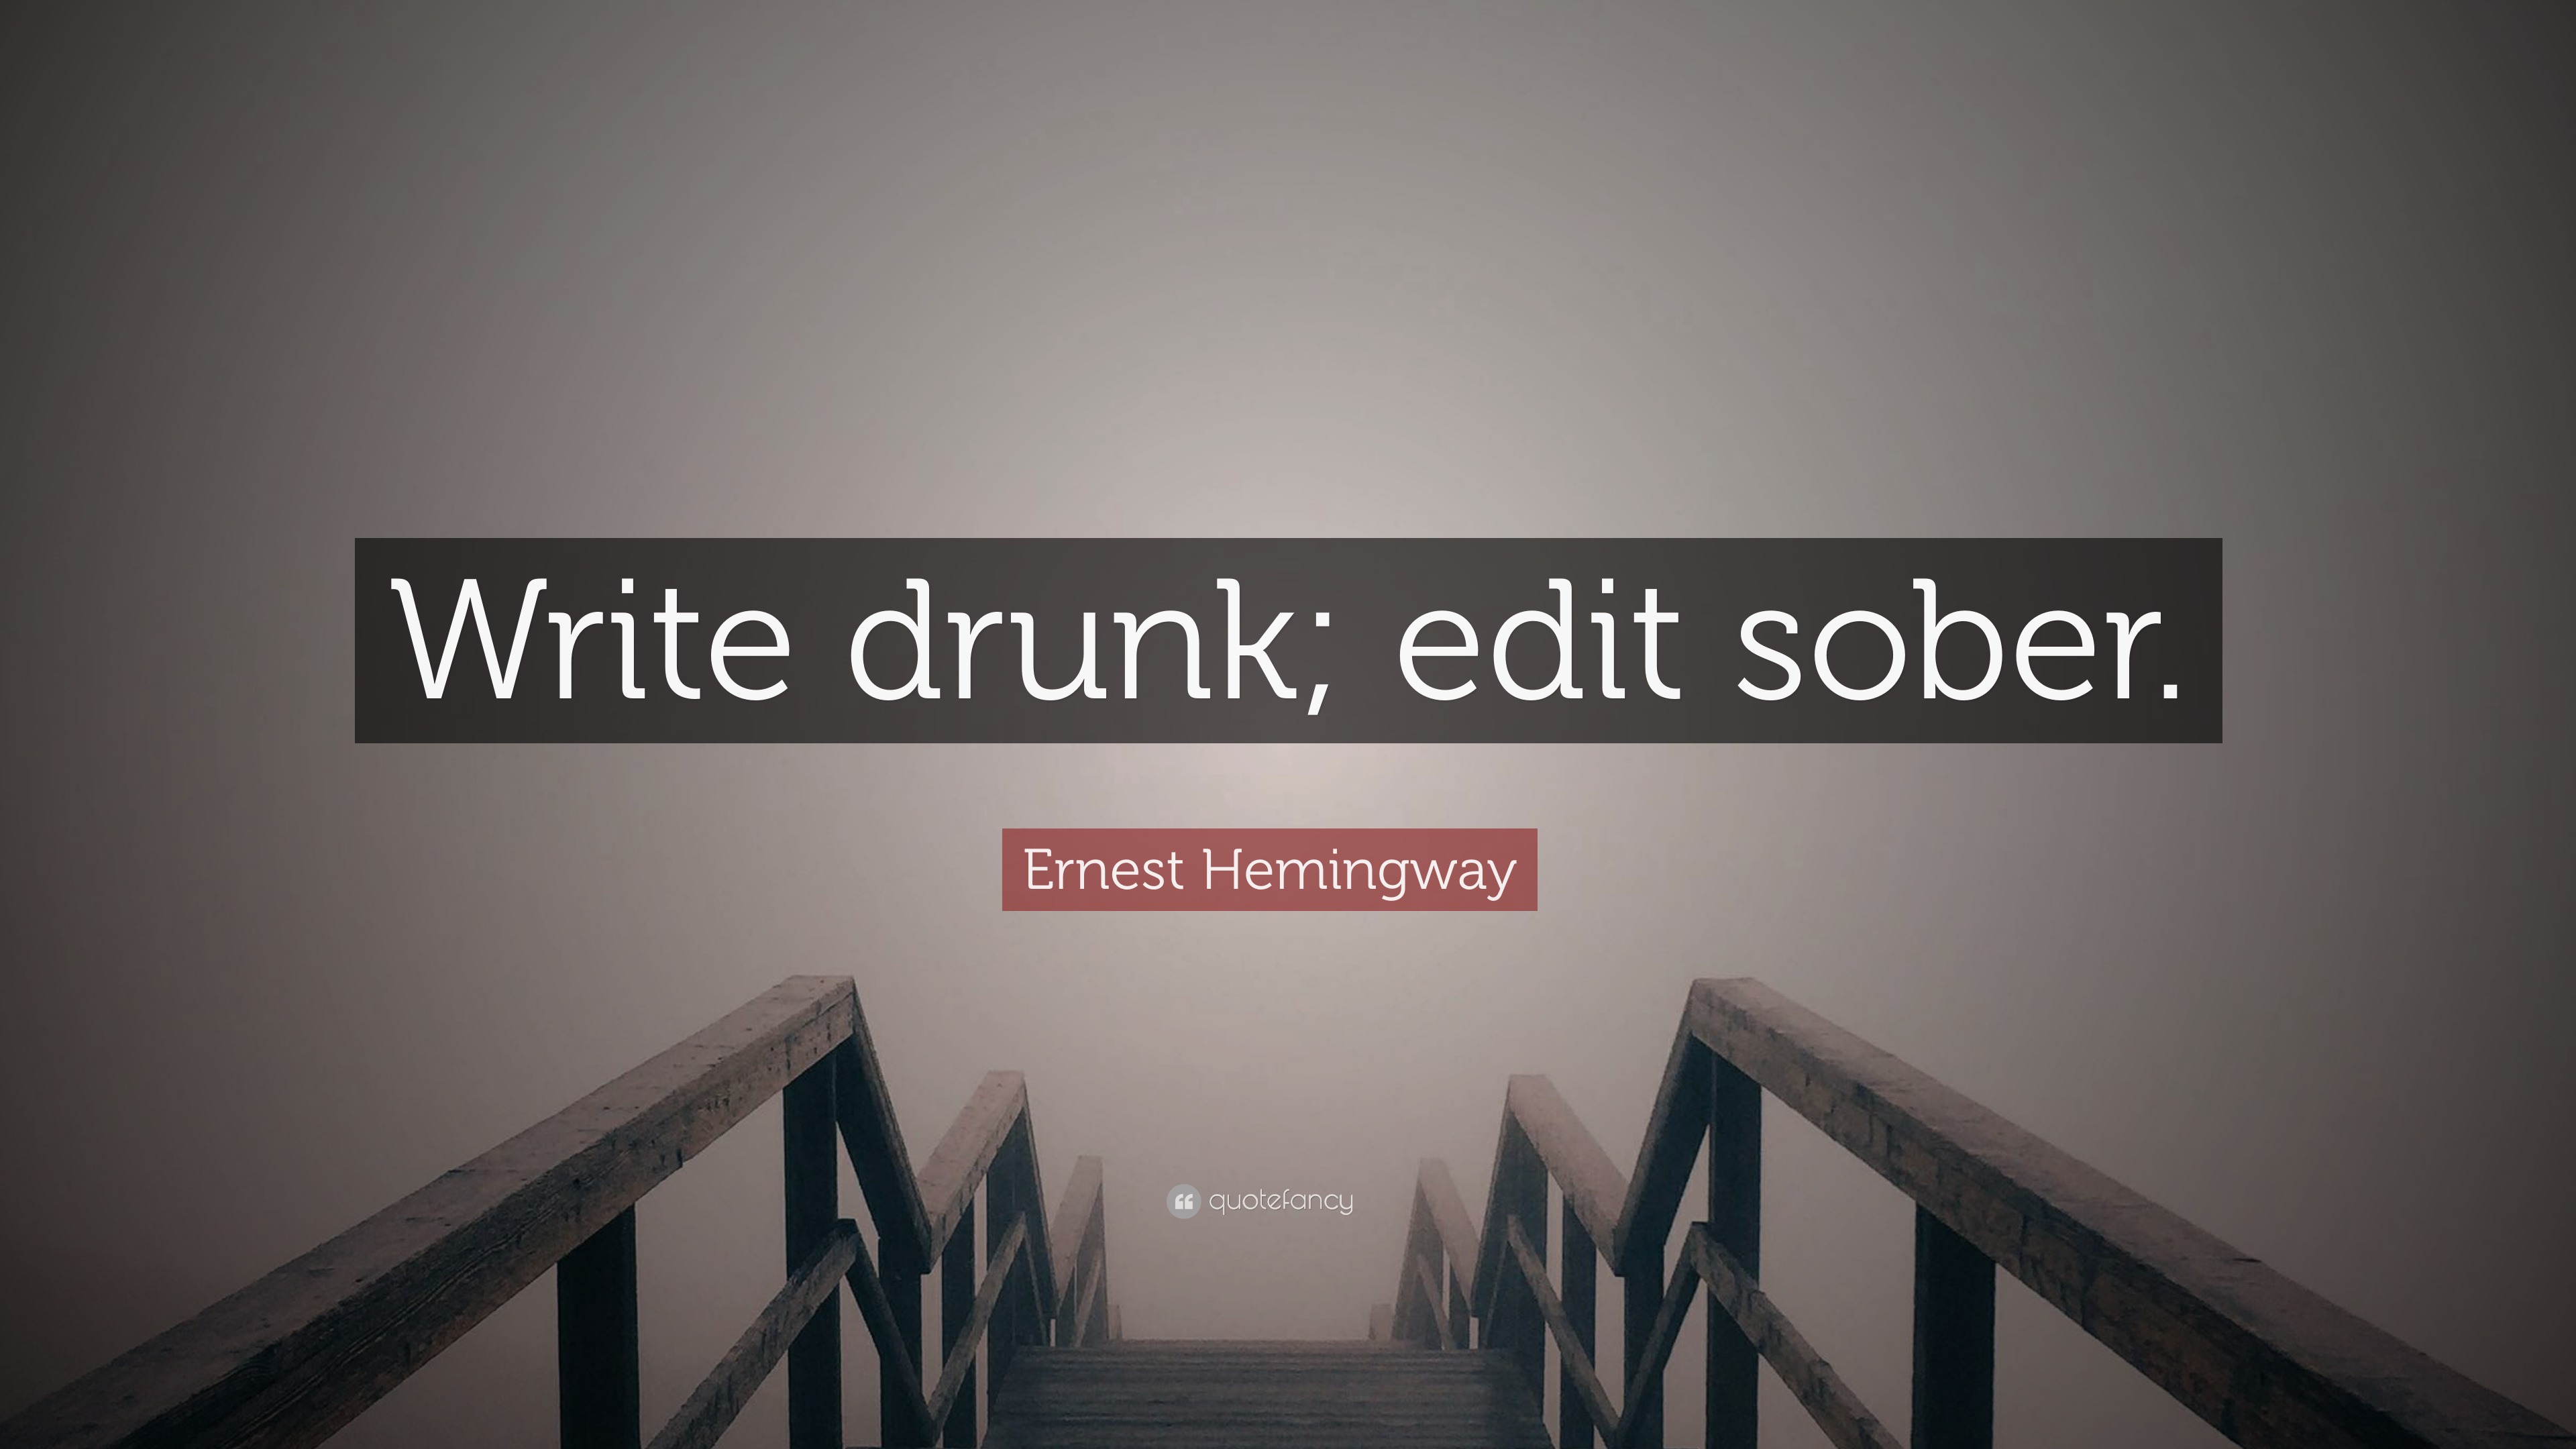 Ernest Hemingway Quote: “Write drunk; edit sober.” (12 wallpapers